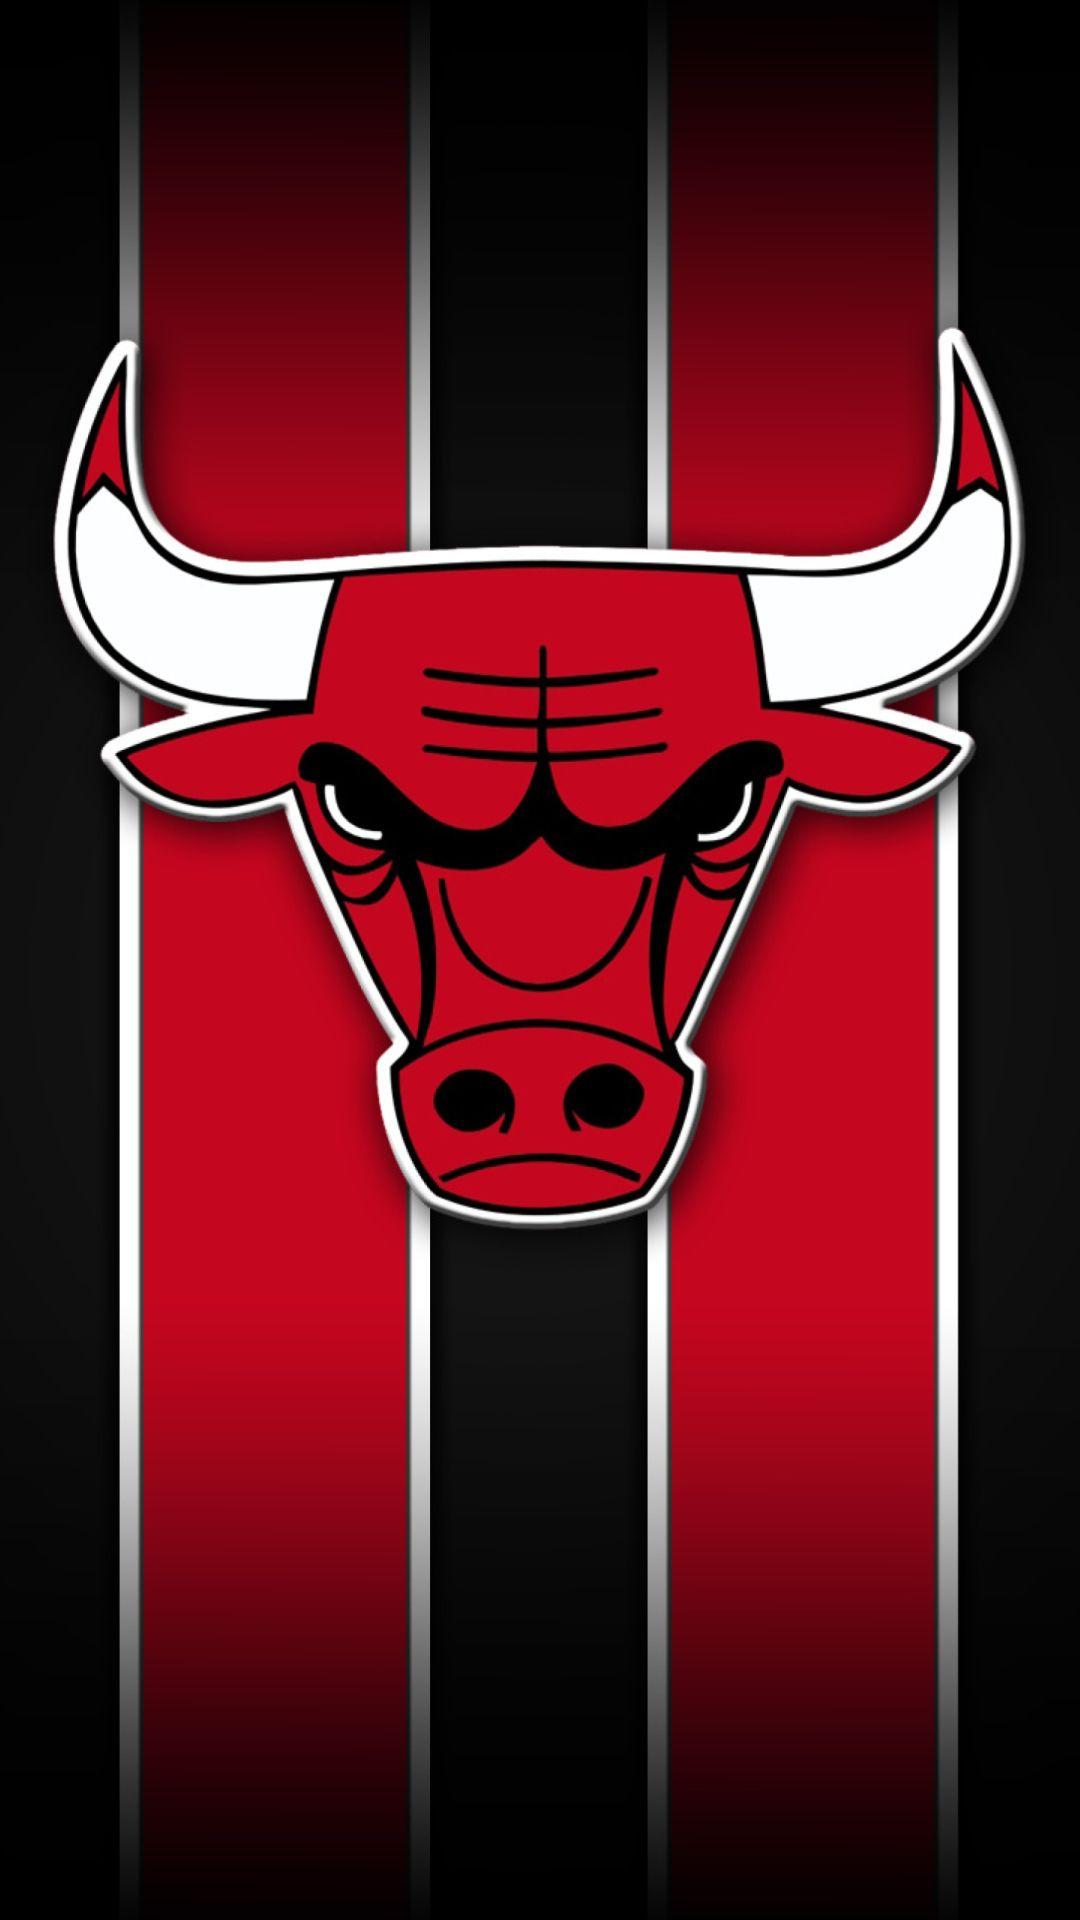 Chicago bulls wallpaper iphone download. Bulls wallpaper